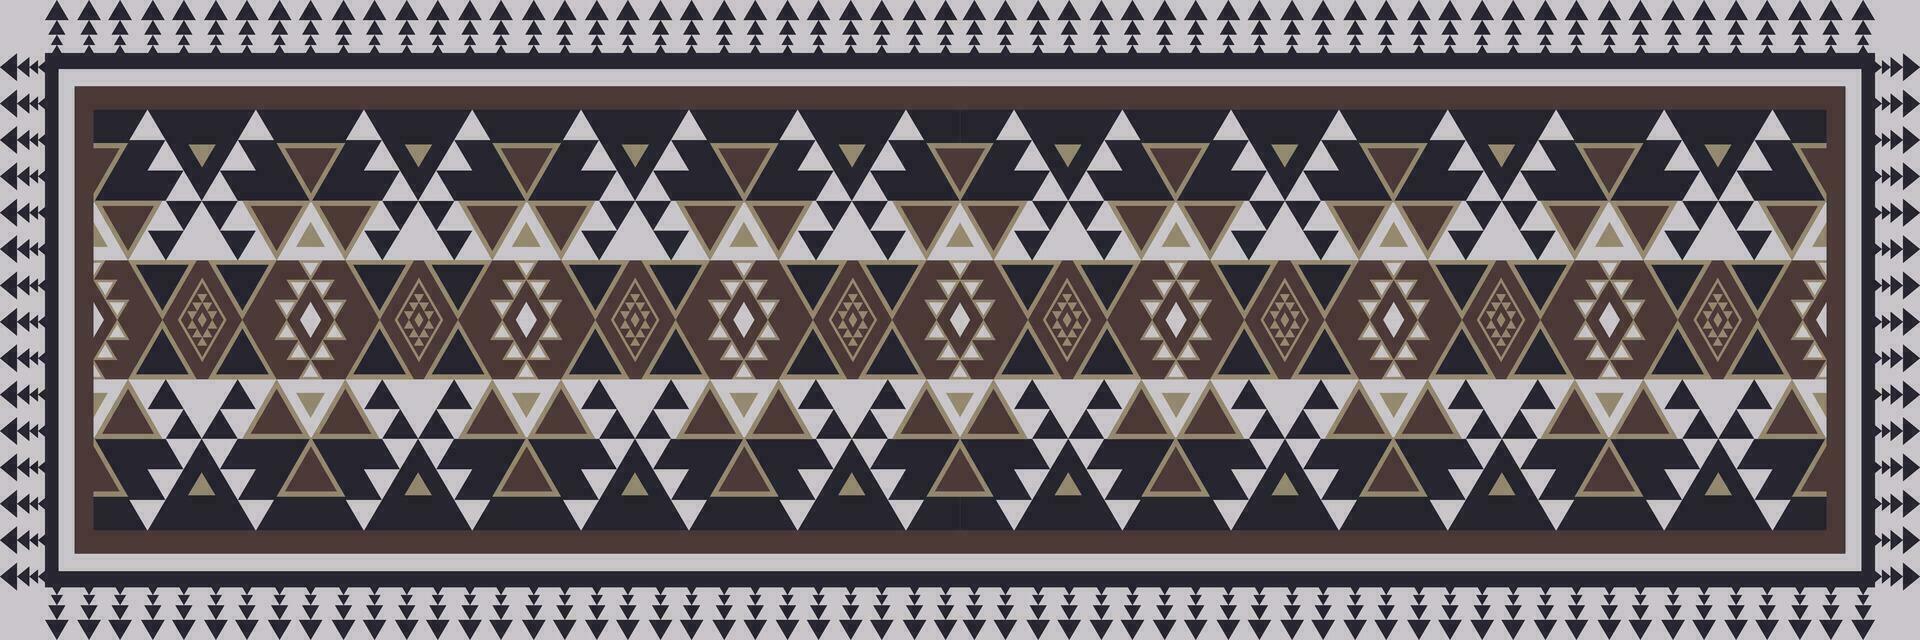 Ethnic southwest rug vintage color pattern. Aztec navajo geometric shape vintage style. Southwest Navajo pattern use for home flooring interior decoration elements, table runner, bed runner. vector